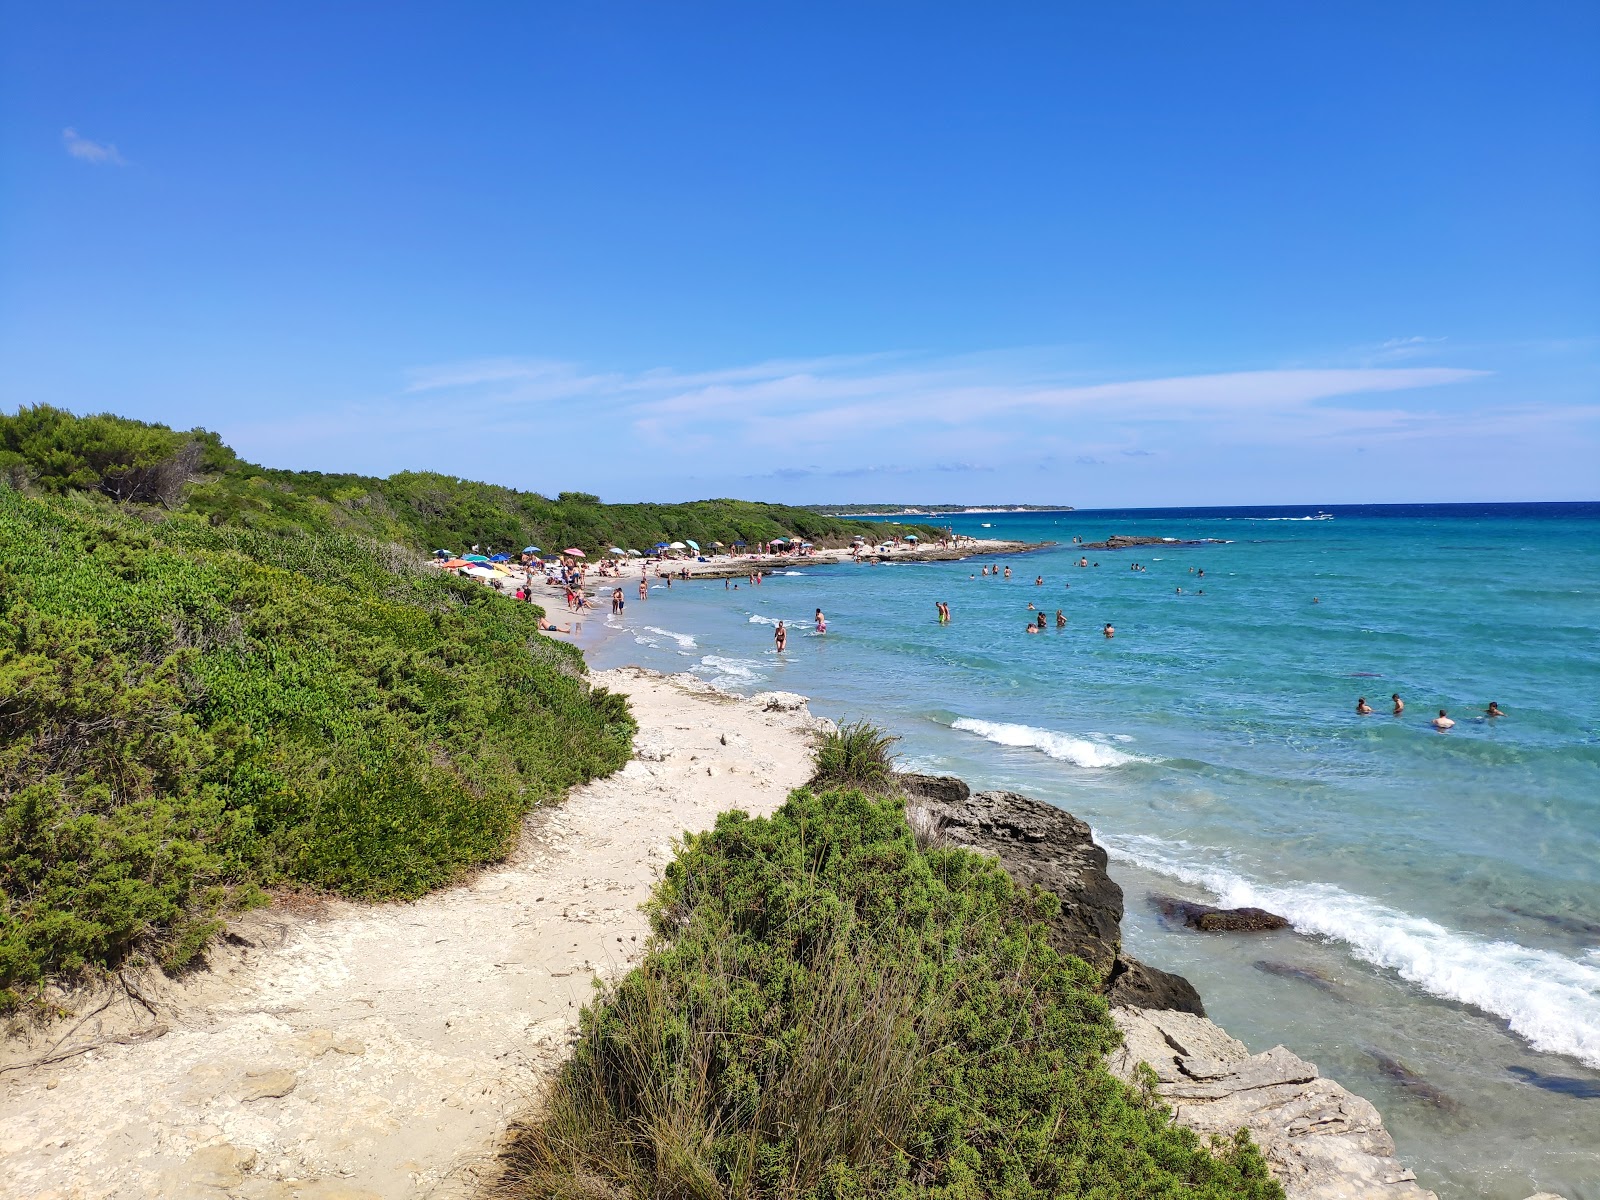 Foto von Spiaggia Baia dei Turchi mit sehr sauber Sauberkeitsgrad